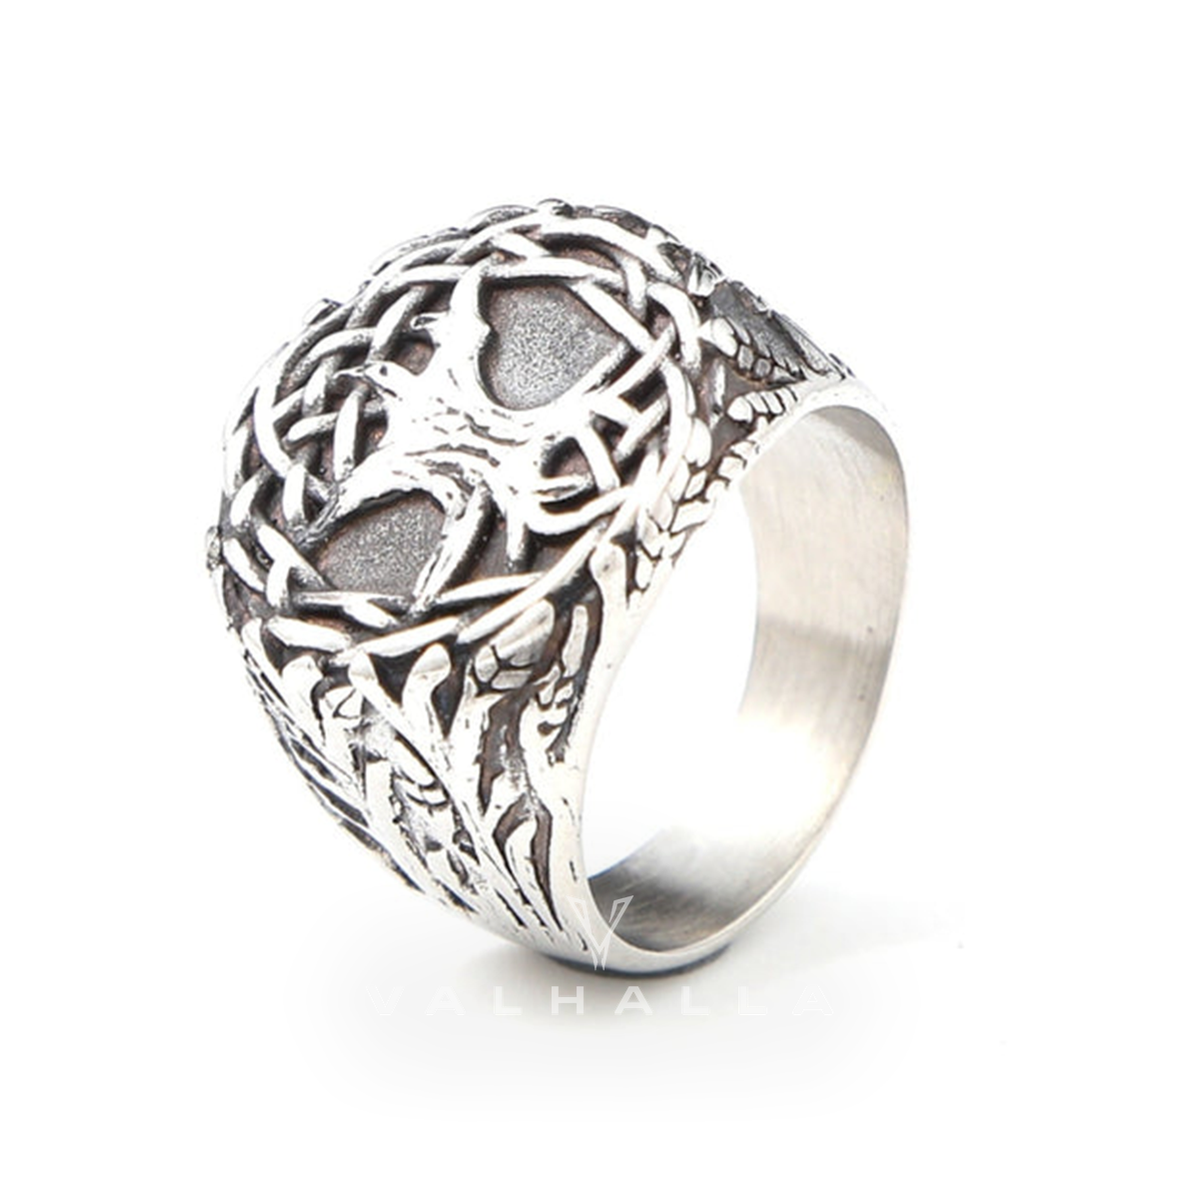 Yggdrasil Stainless Steel Viking Ring